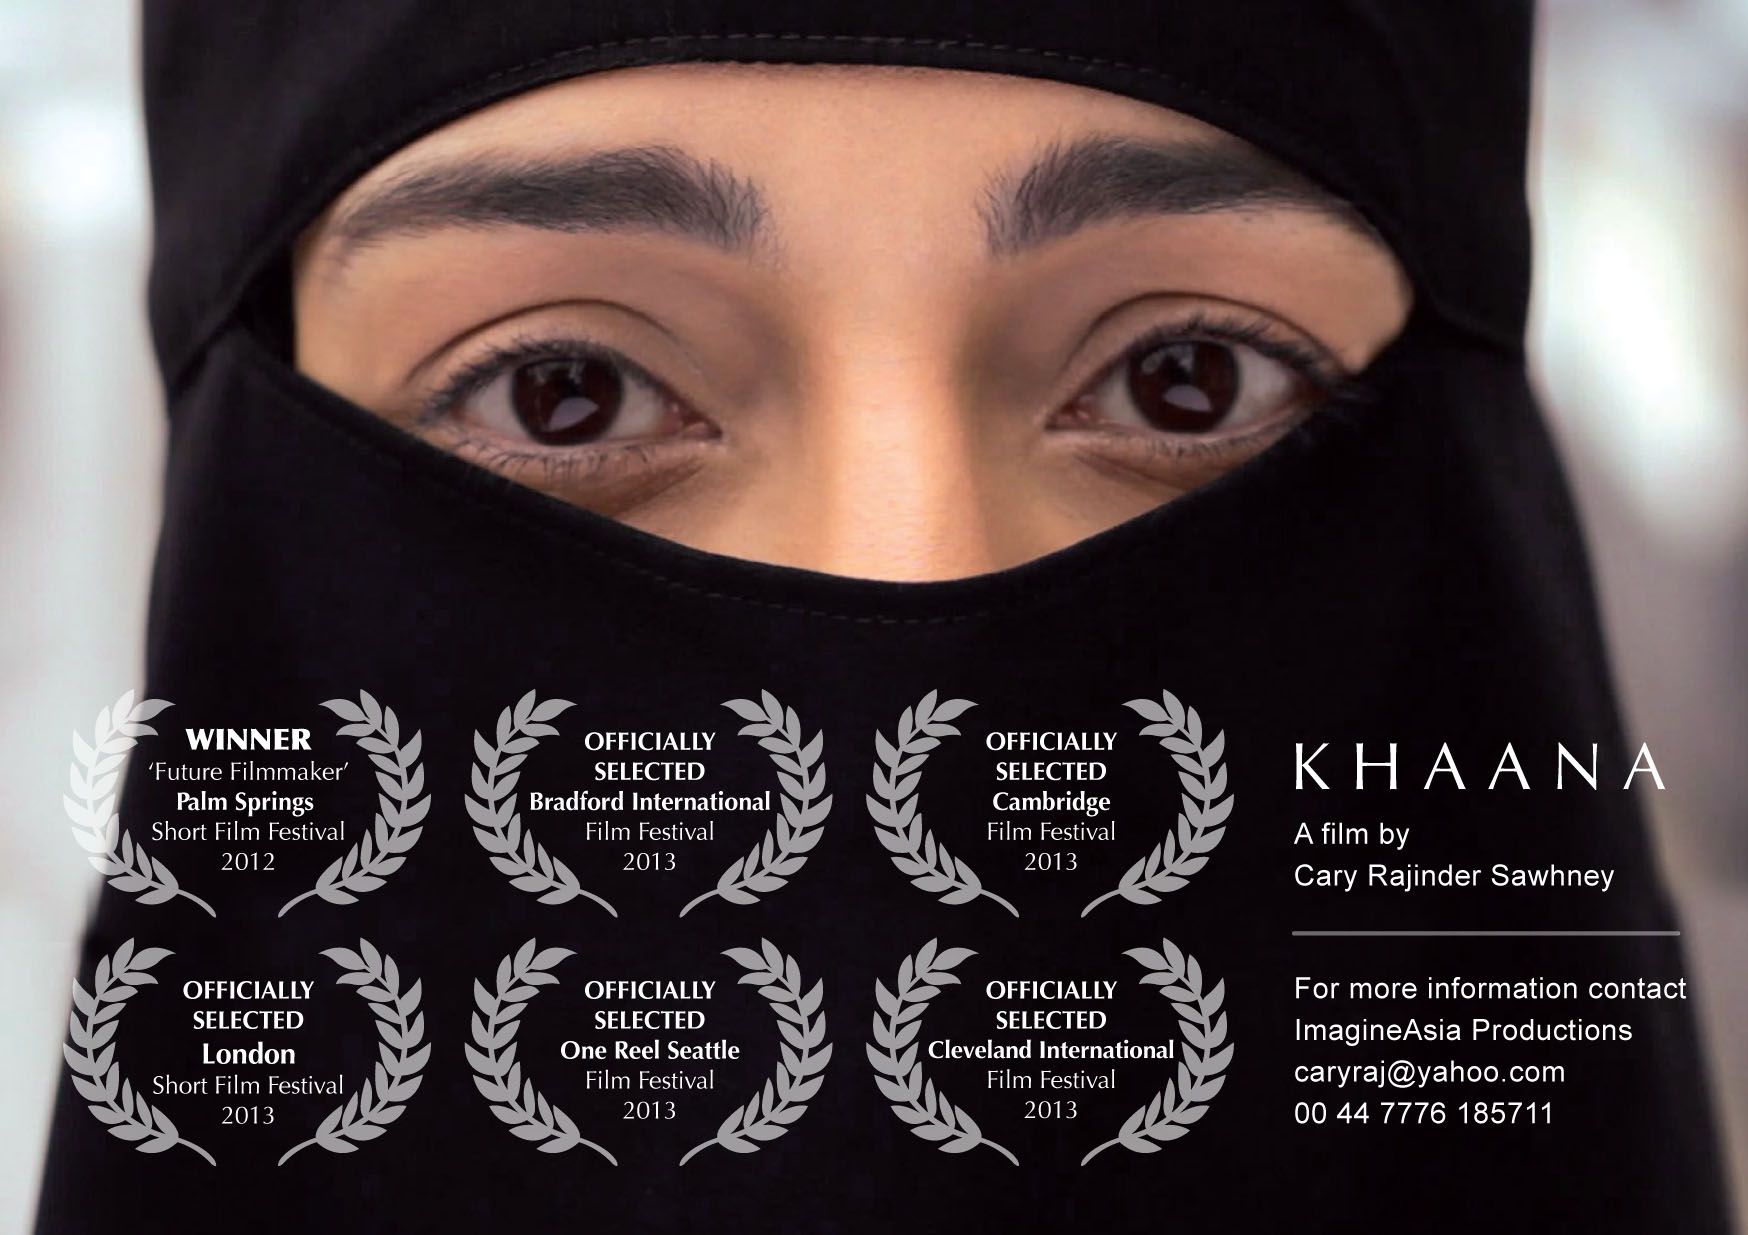 Khaana - a film by Cary Rajinder Sawhney. (Feryna Wazheir as Nasreen).